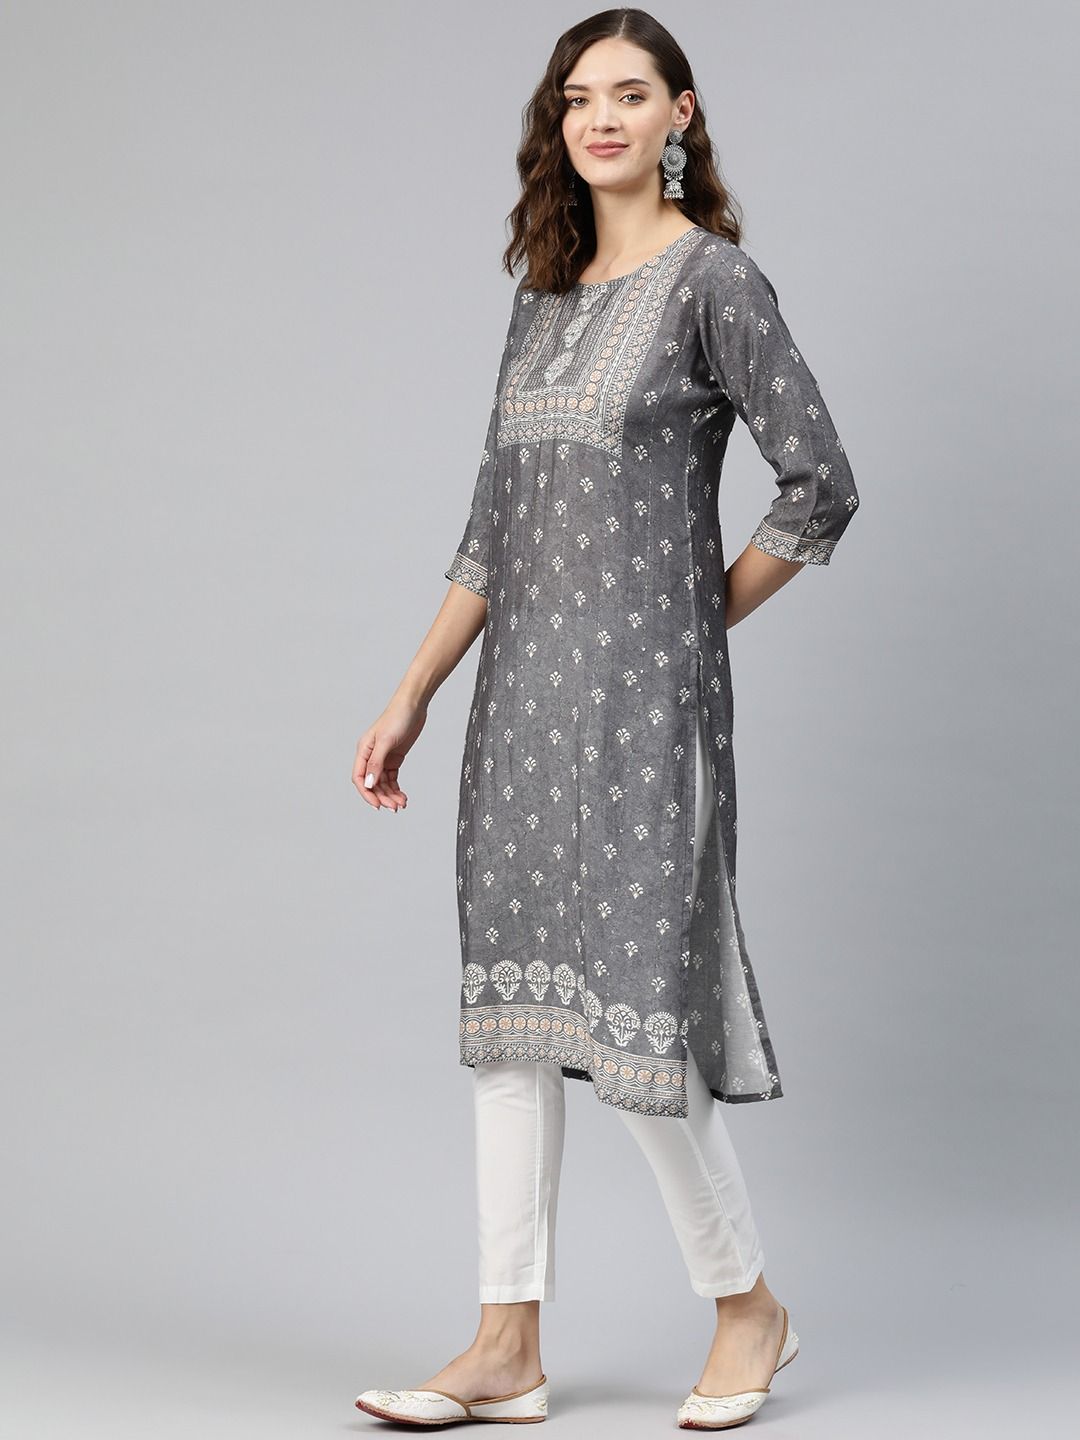 Handloom Slub Cotton Embroidery Kurti In Grey Colour - KR5413346